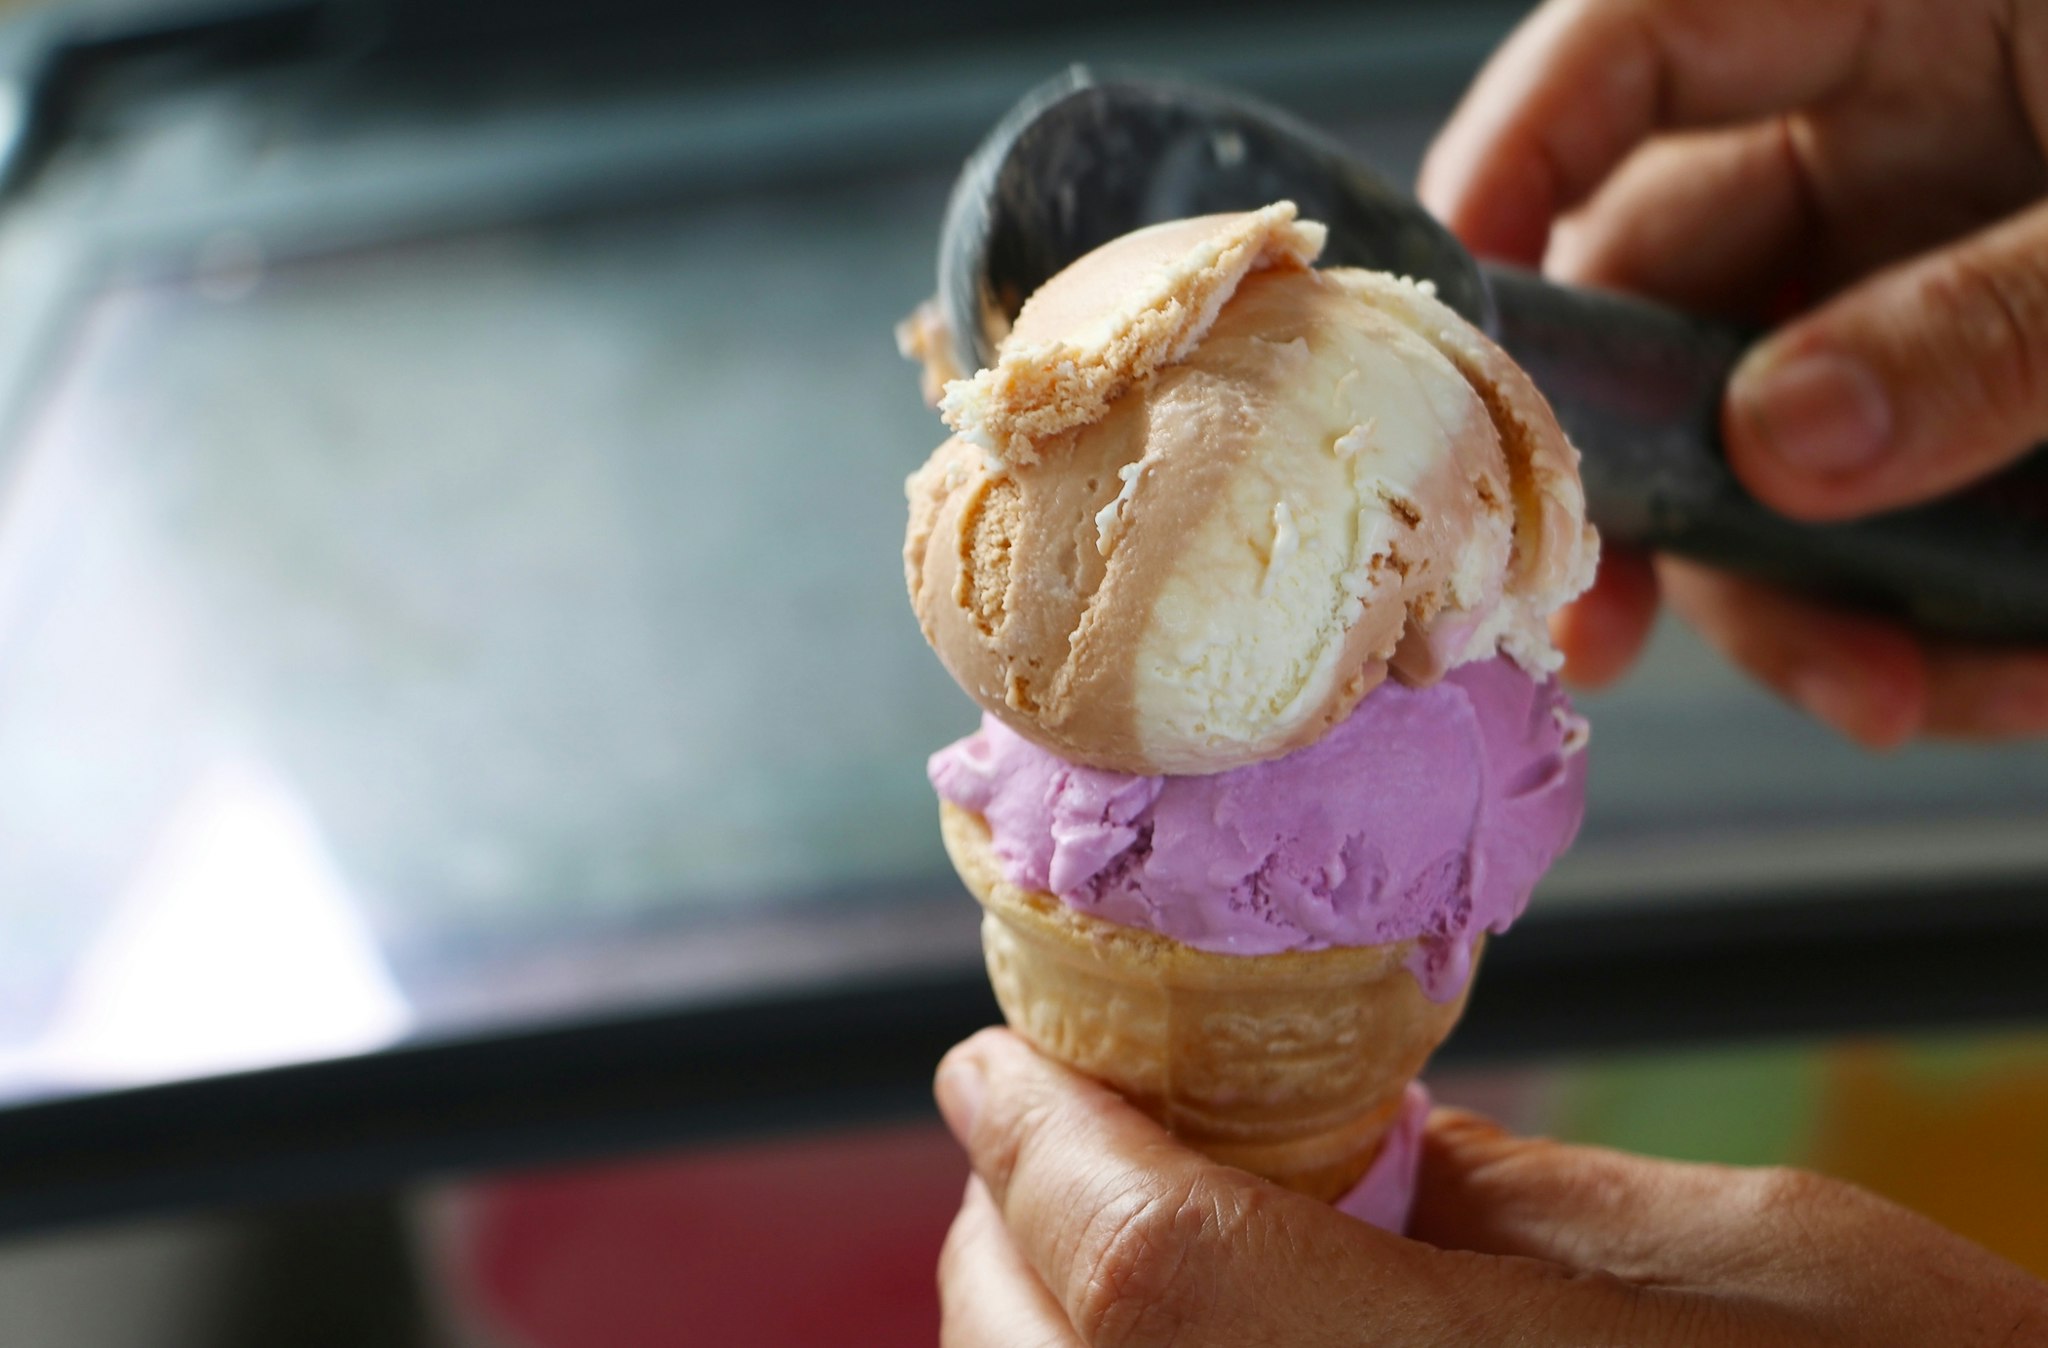 Crop hand scooped ice cream into ice cream cone